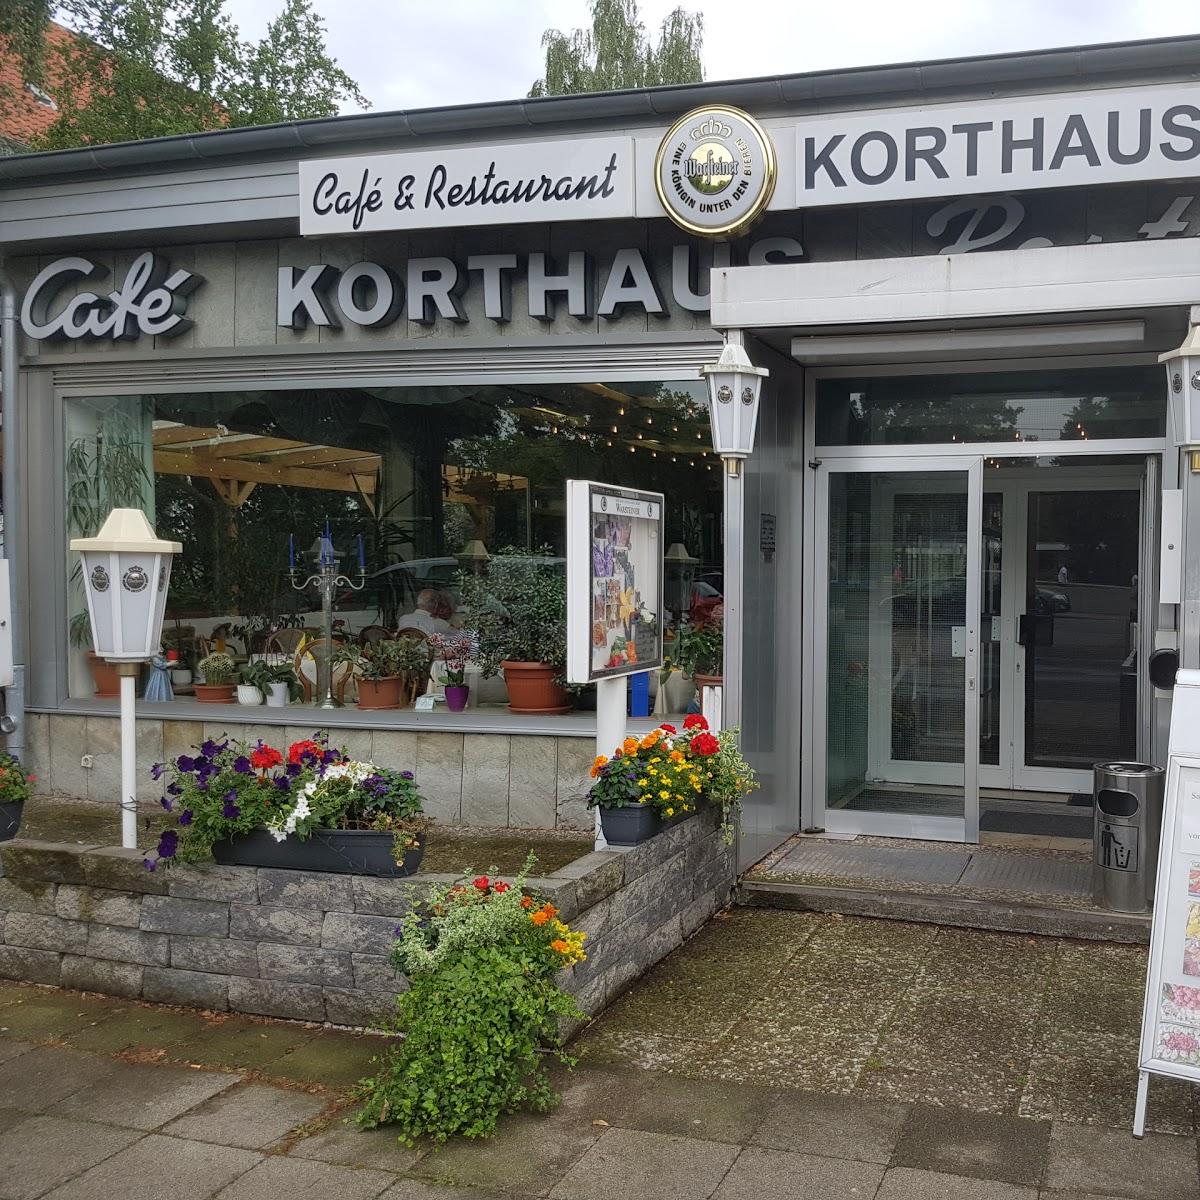 Restaurant "Cafe Korthaus" in Hannover